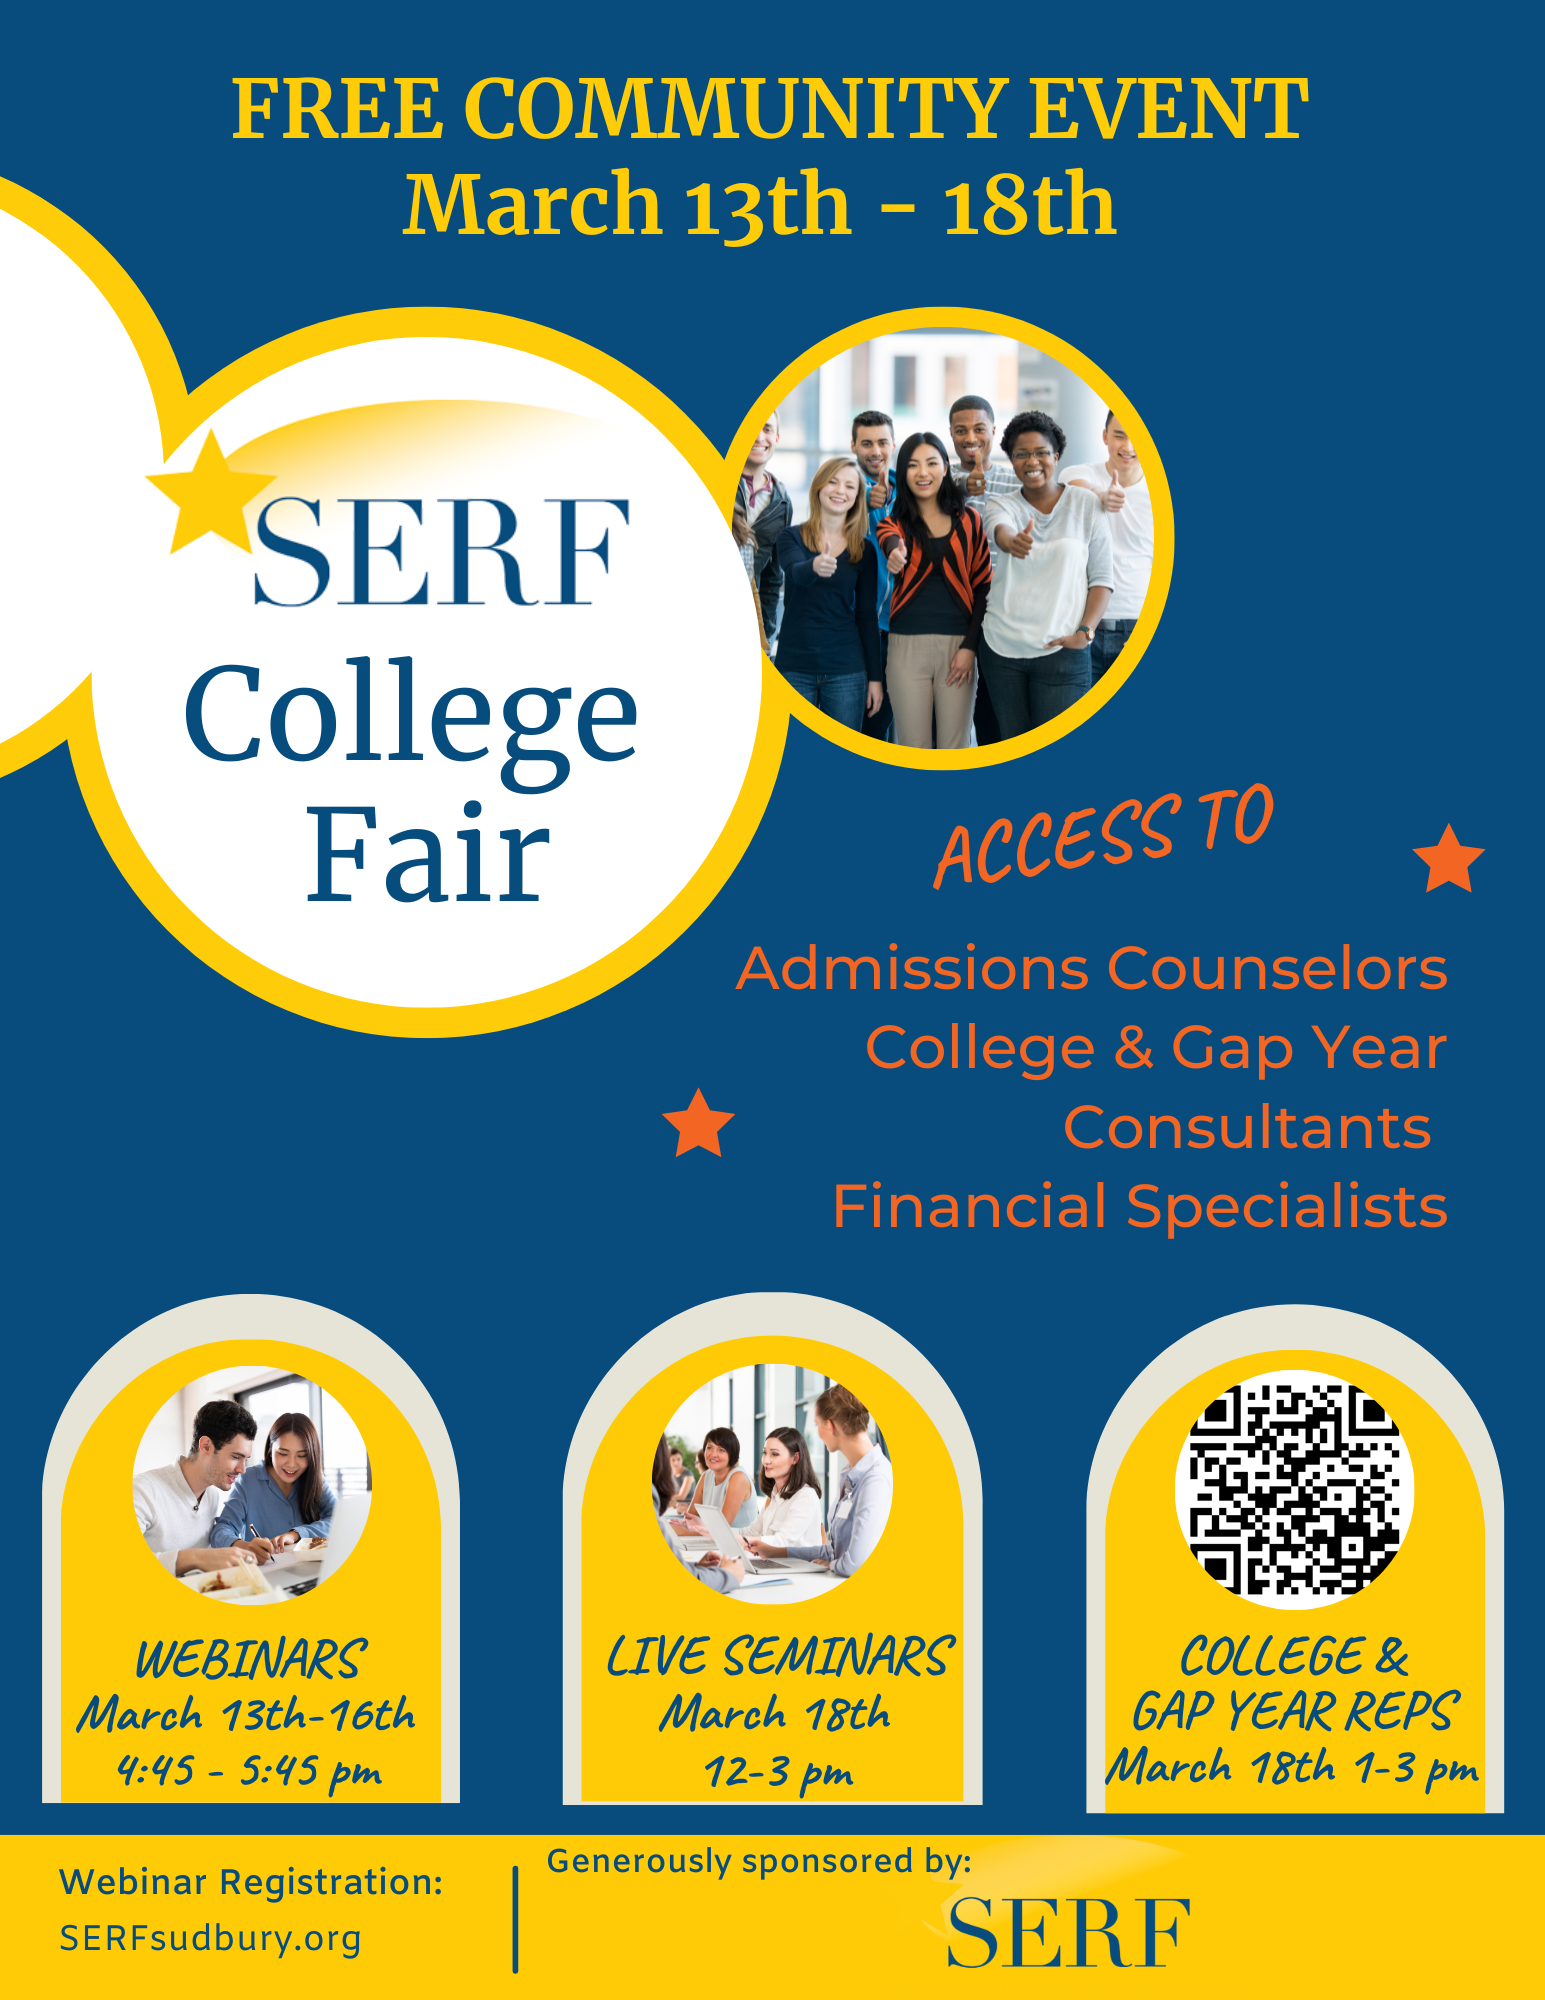 SEF College Fair Event Information